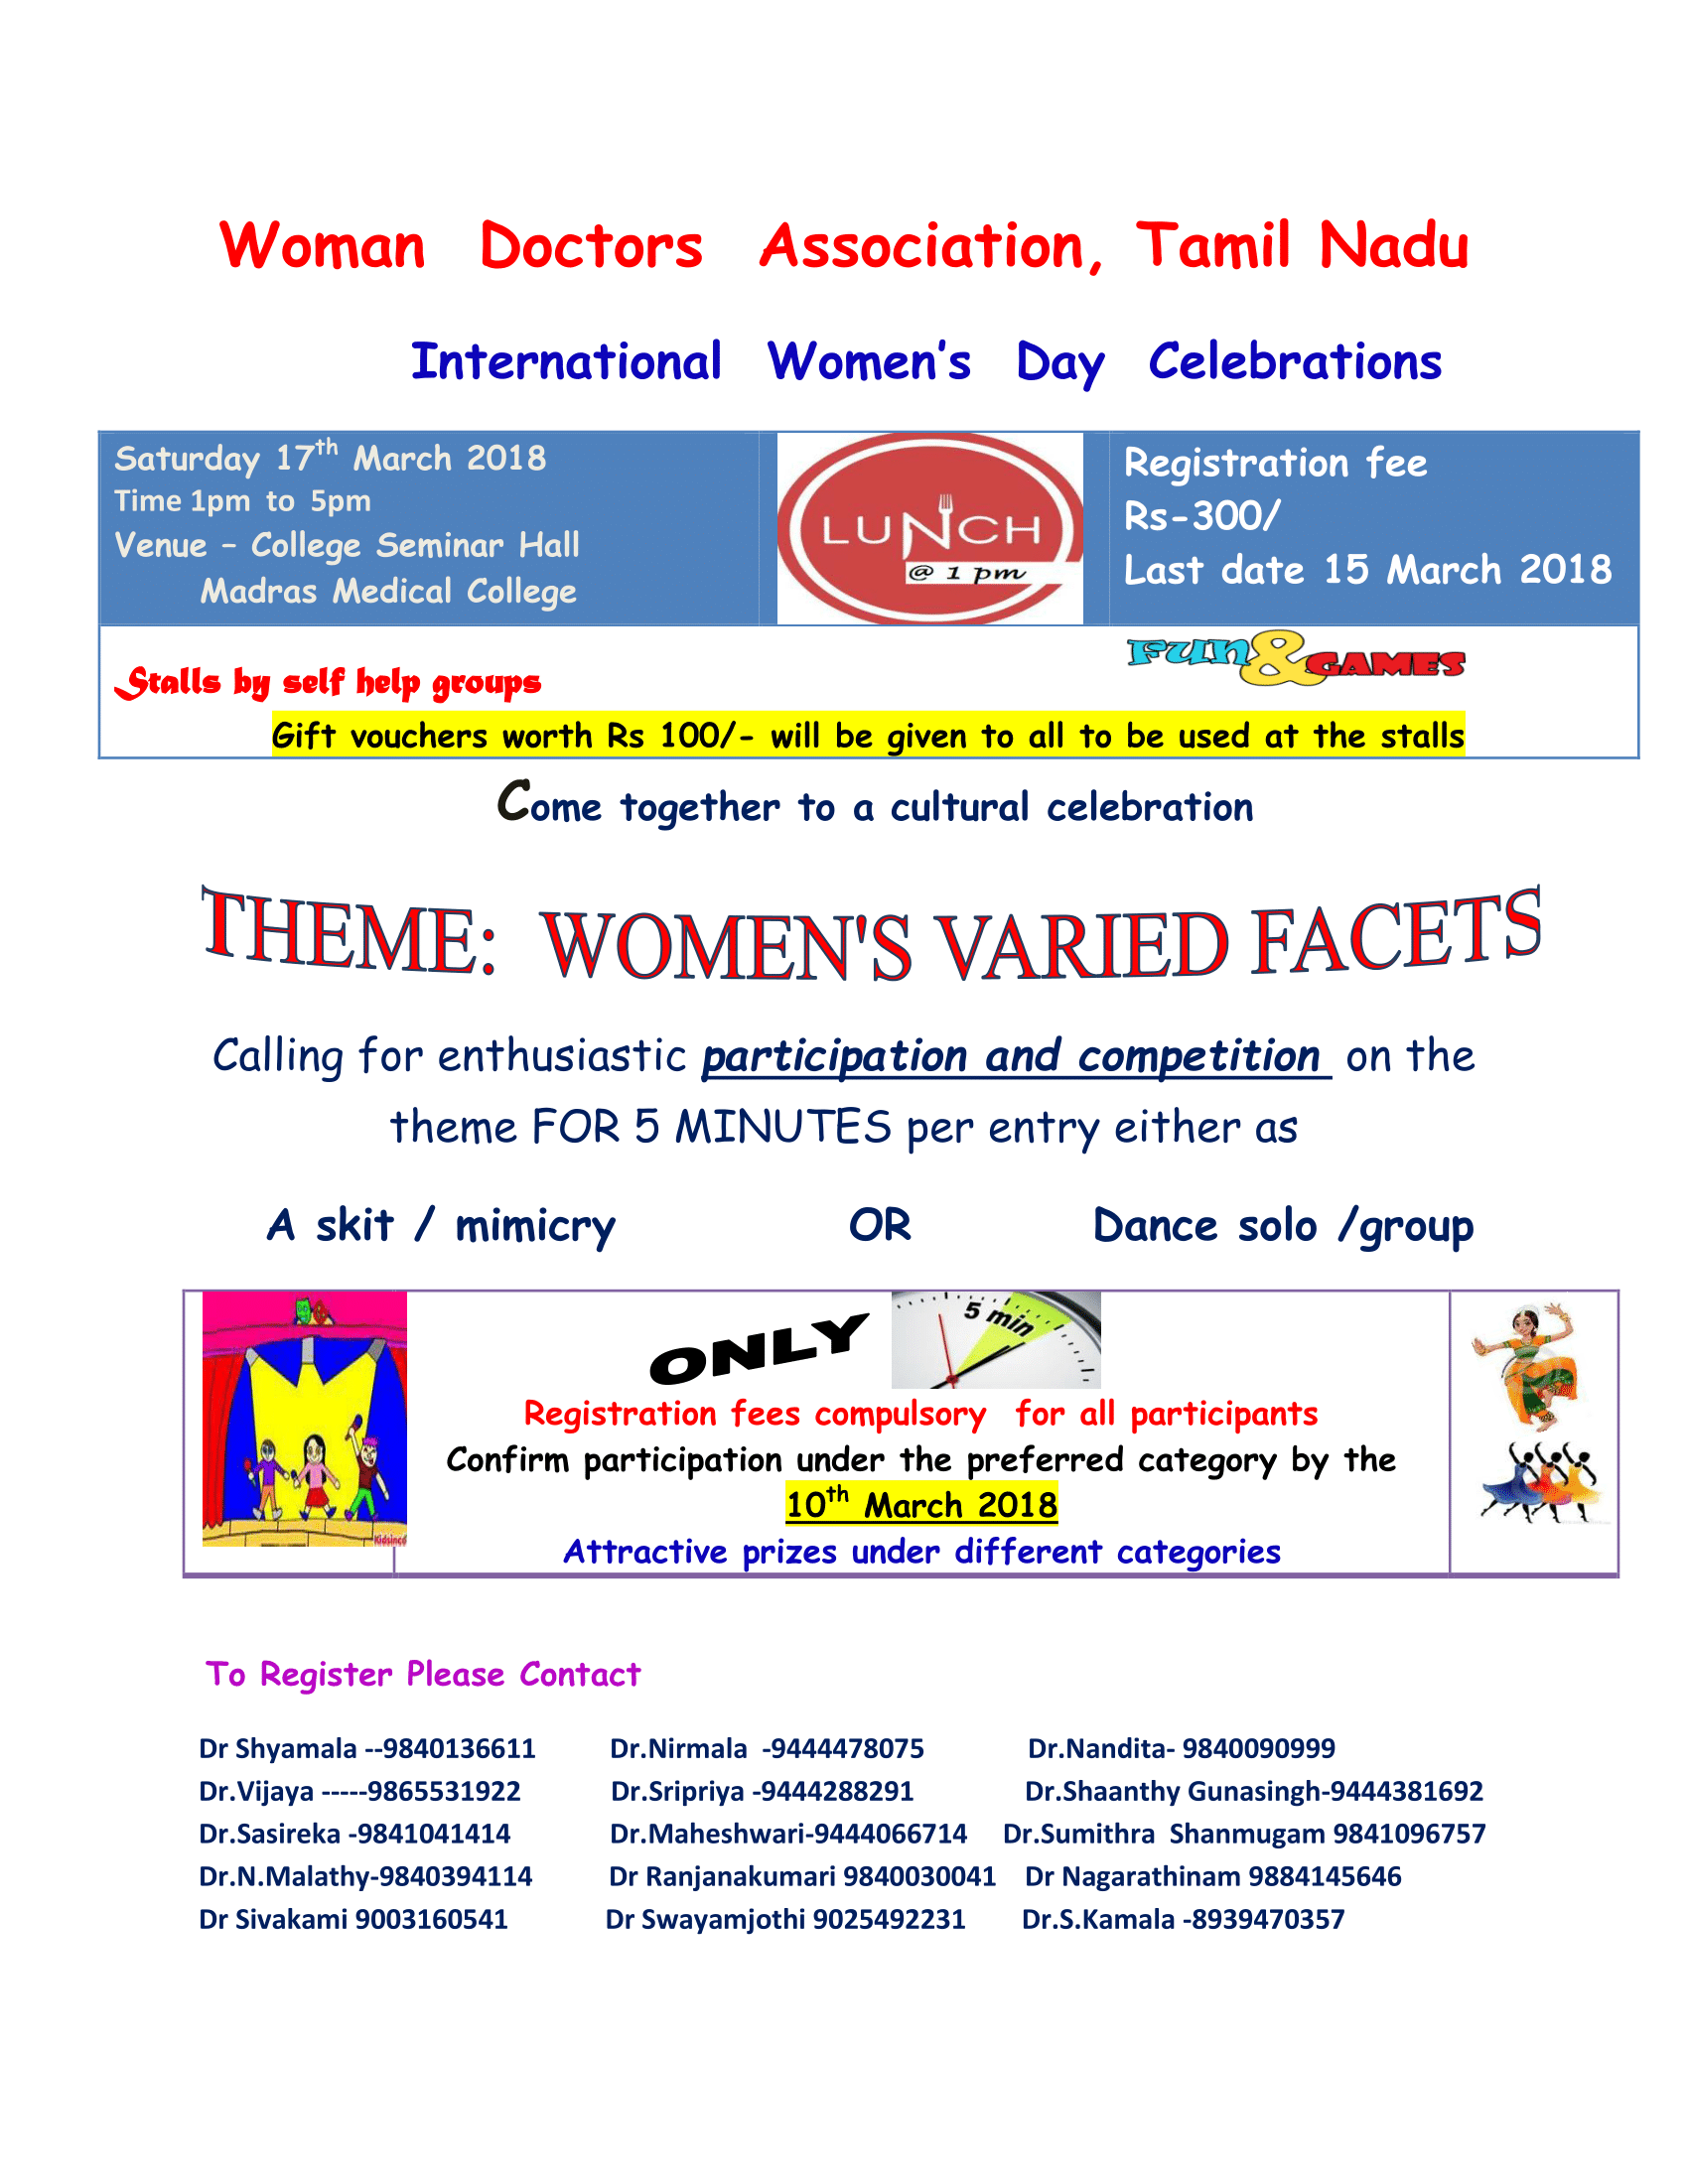 Woman Doctors Association, Tamil Nadu International Women’s Day Celebrations